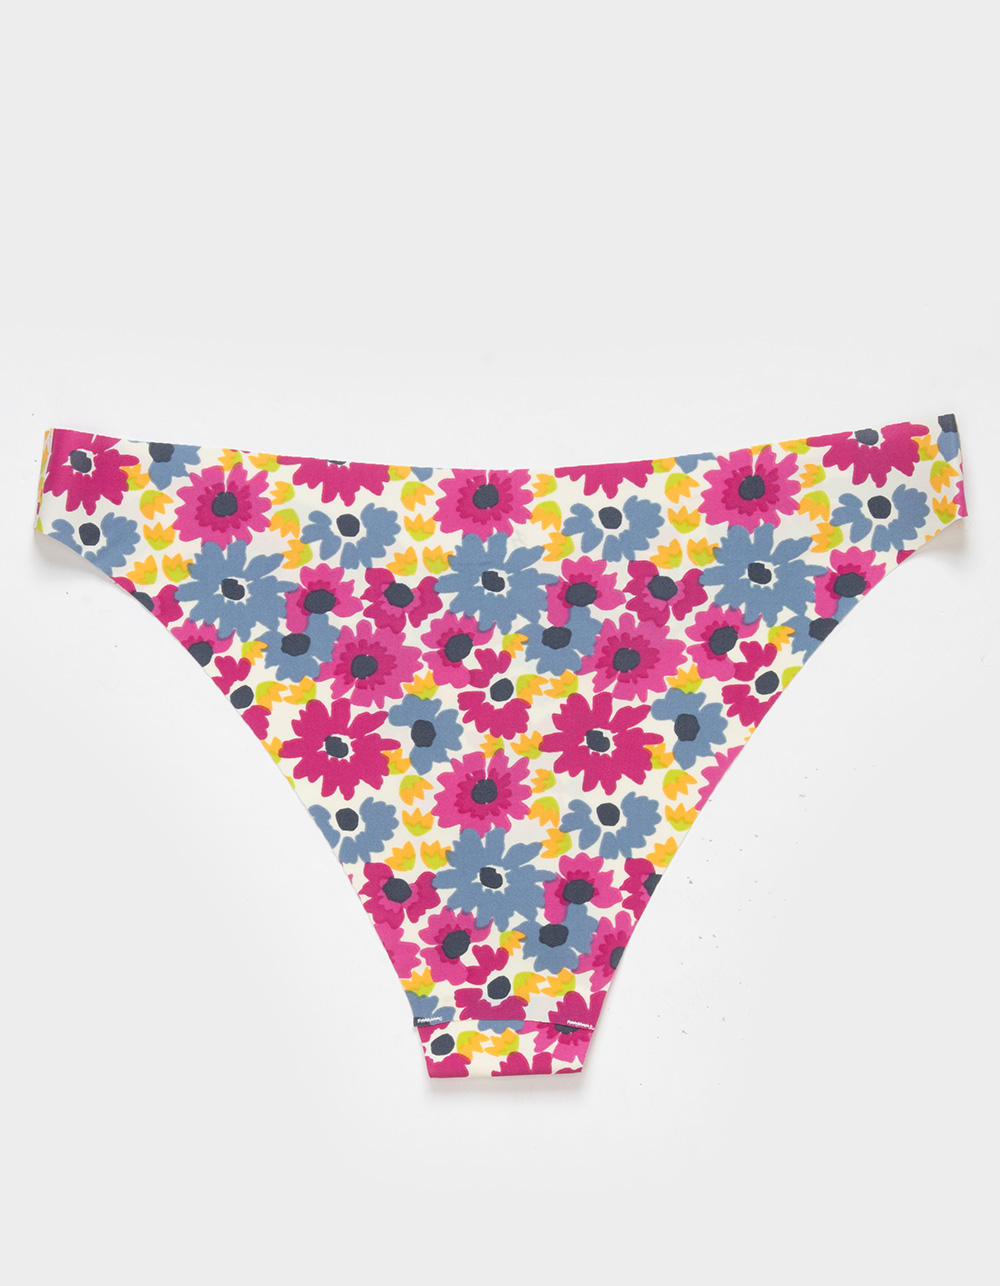 SKY & SPARROW Hibiscus V Lasercut Cheeky Panties - MULTI